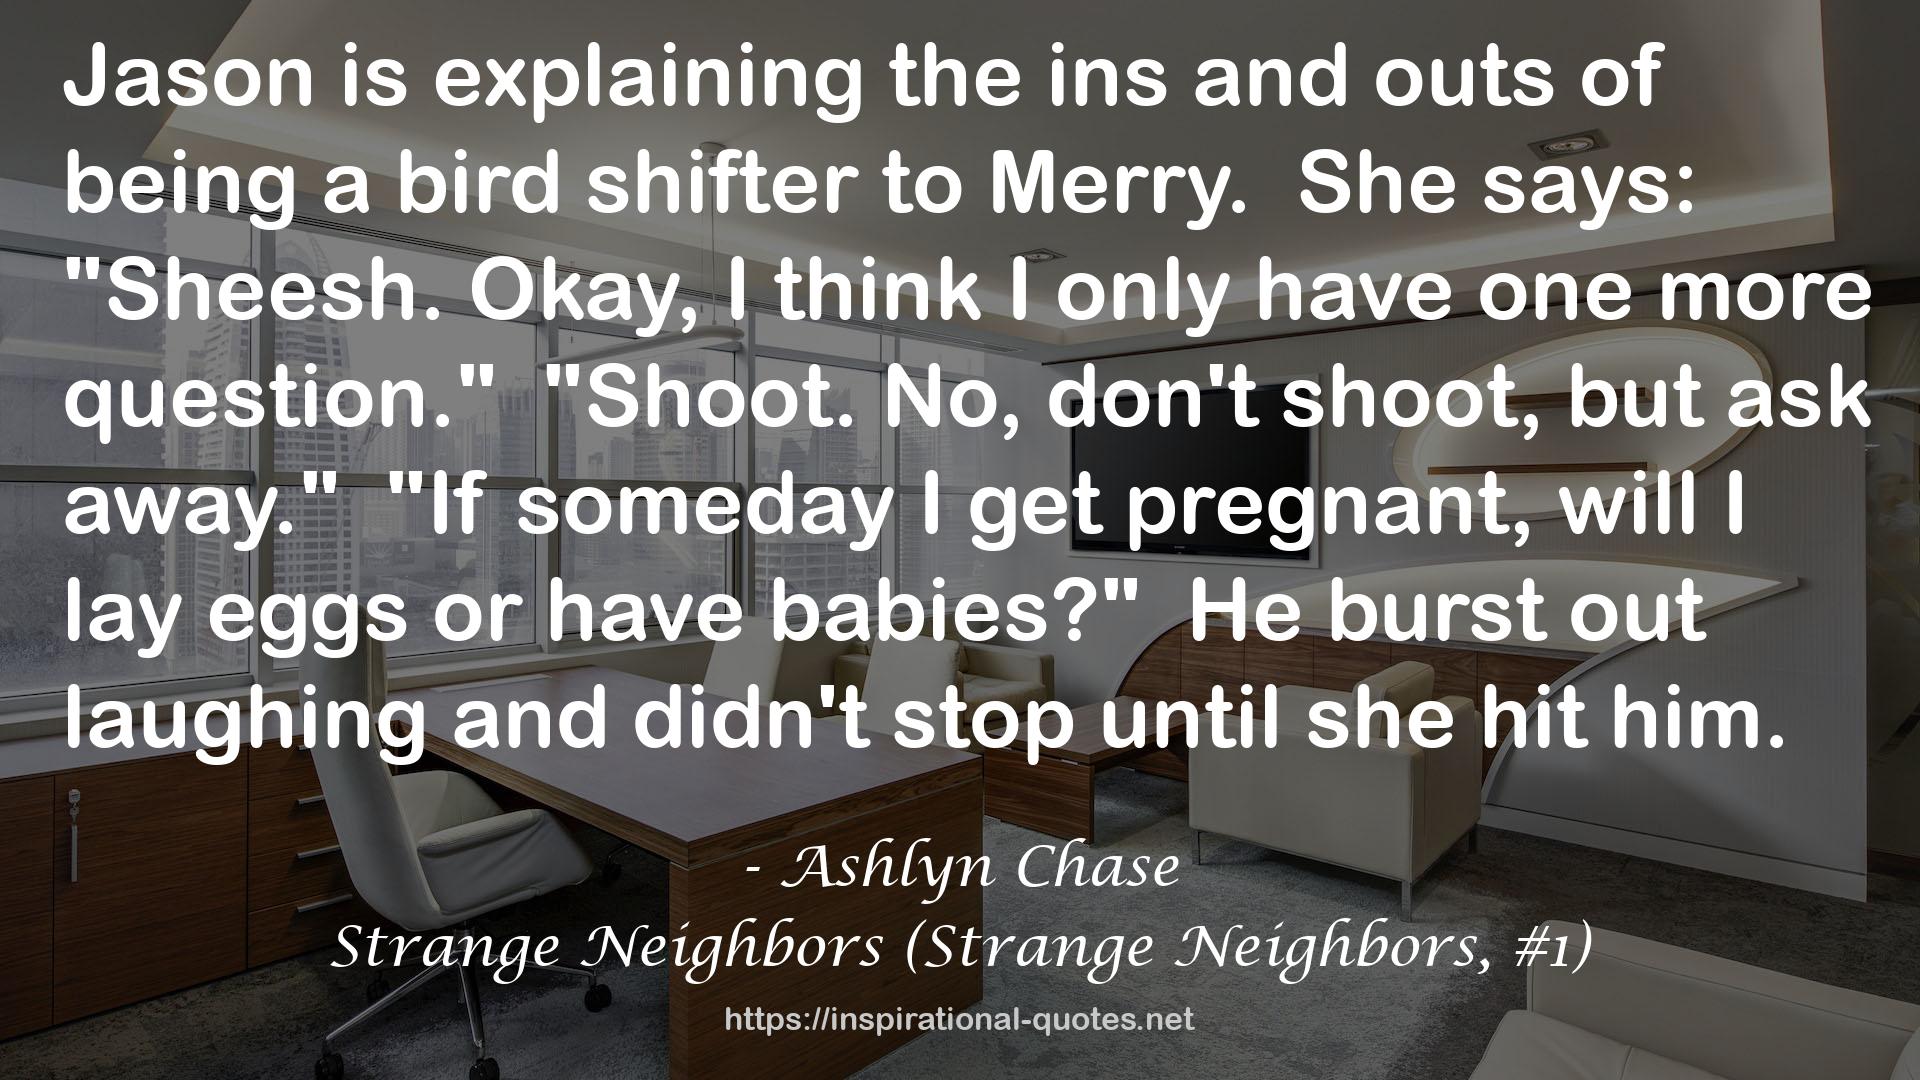 Strange Neighbors (Strange Neighbors, #1) QUOTES